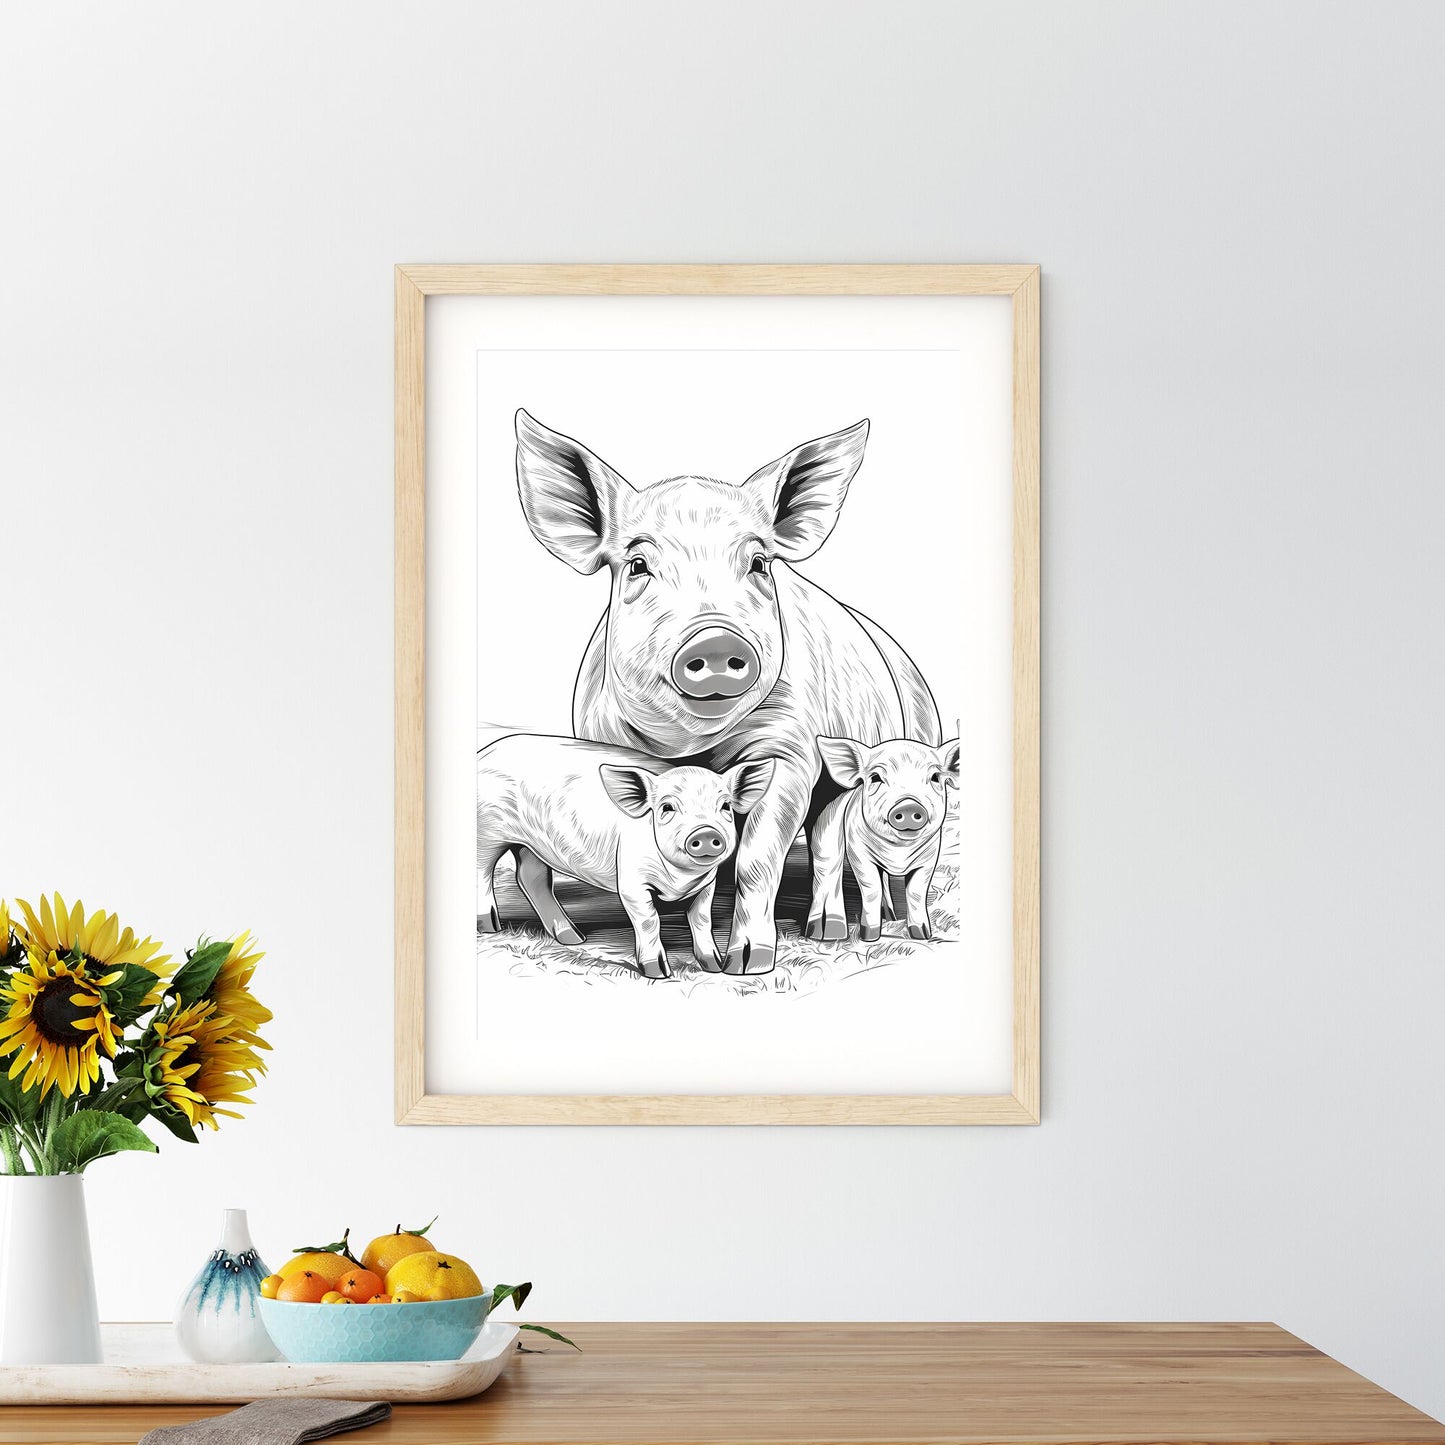 Pig And Piglets Standing Together Art Print Default Title